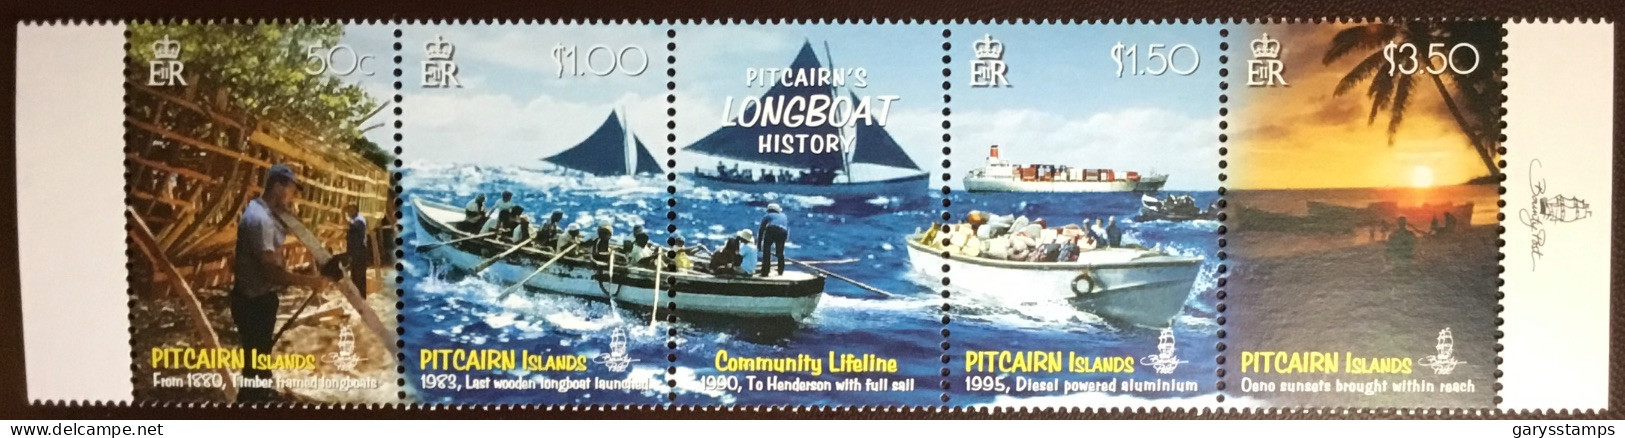 Pitcairn Islands 2008 Longboat History MNH - Pitcairn Islands